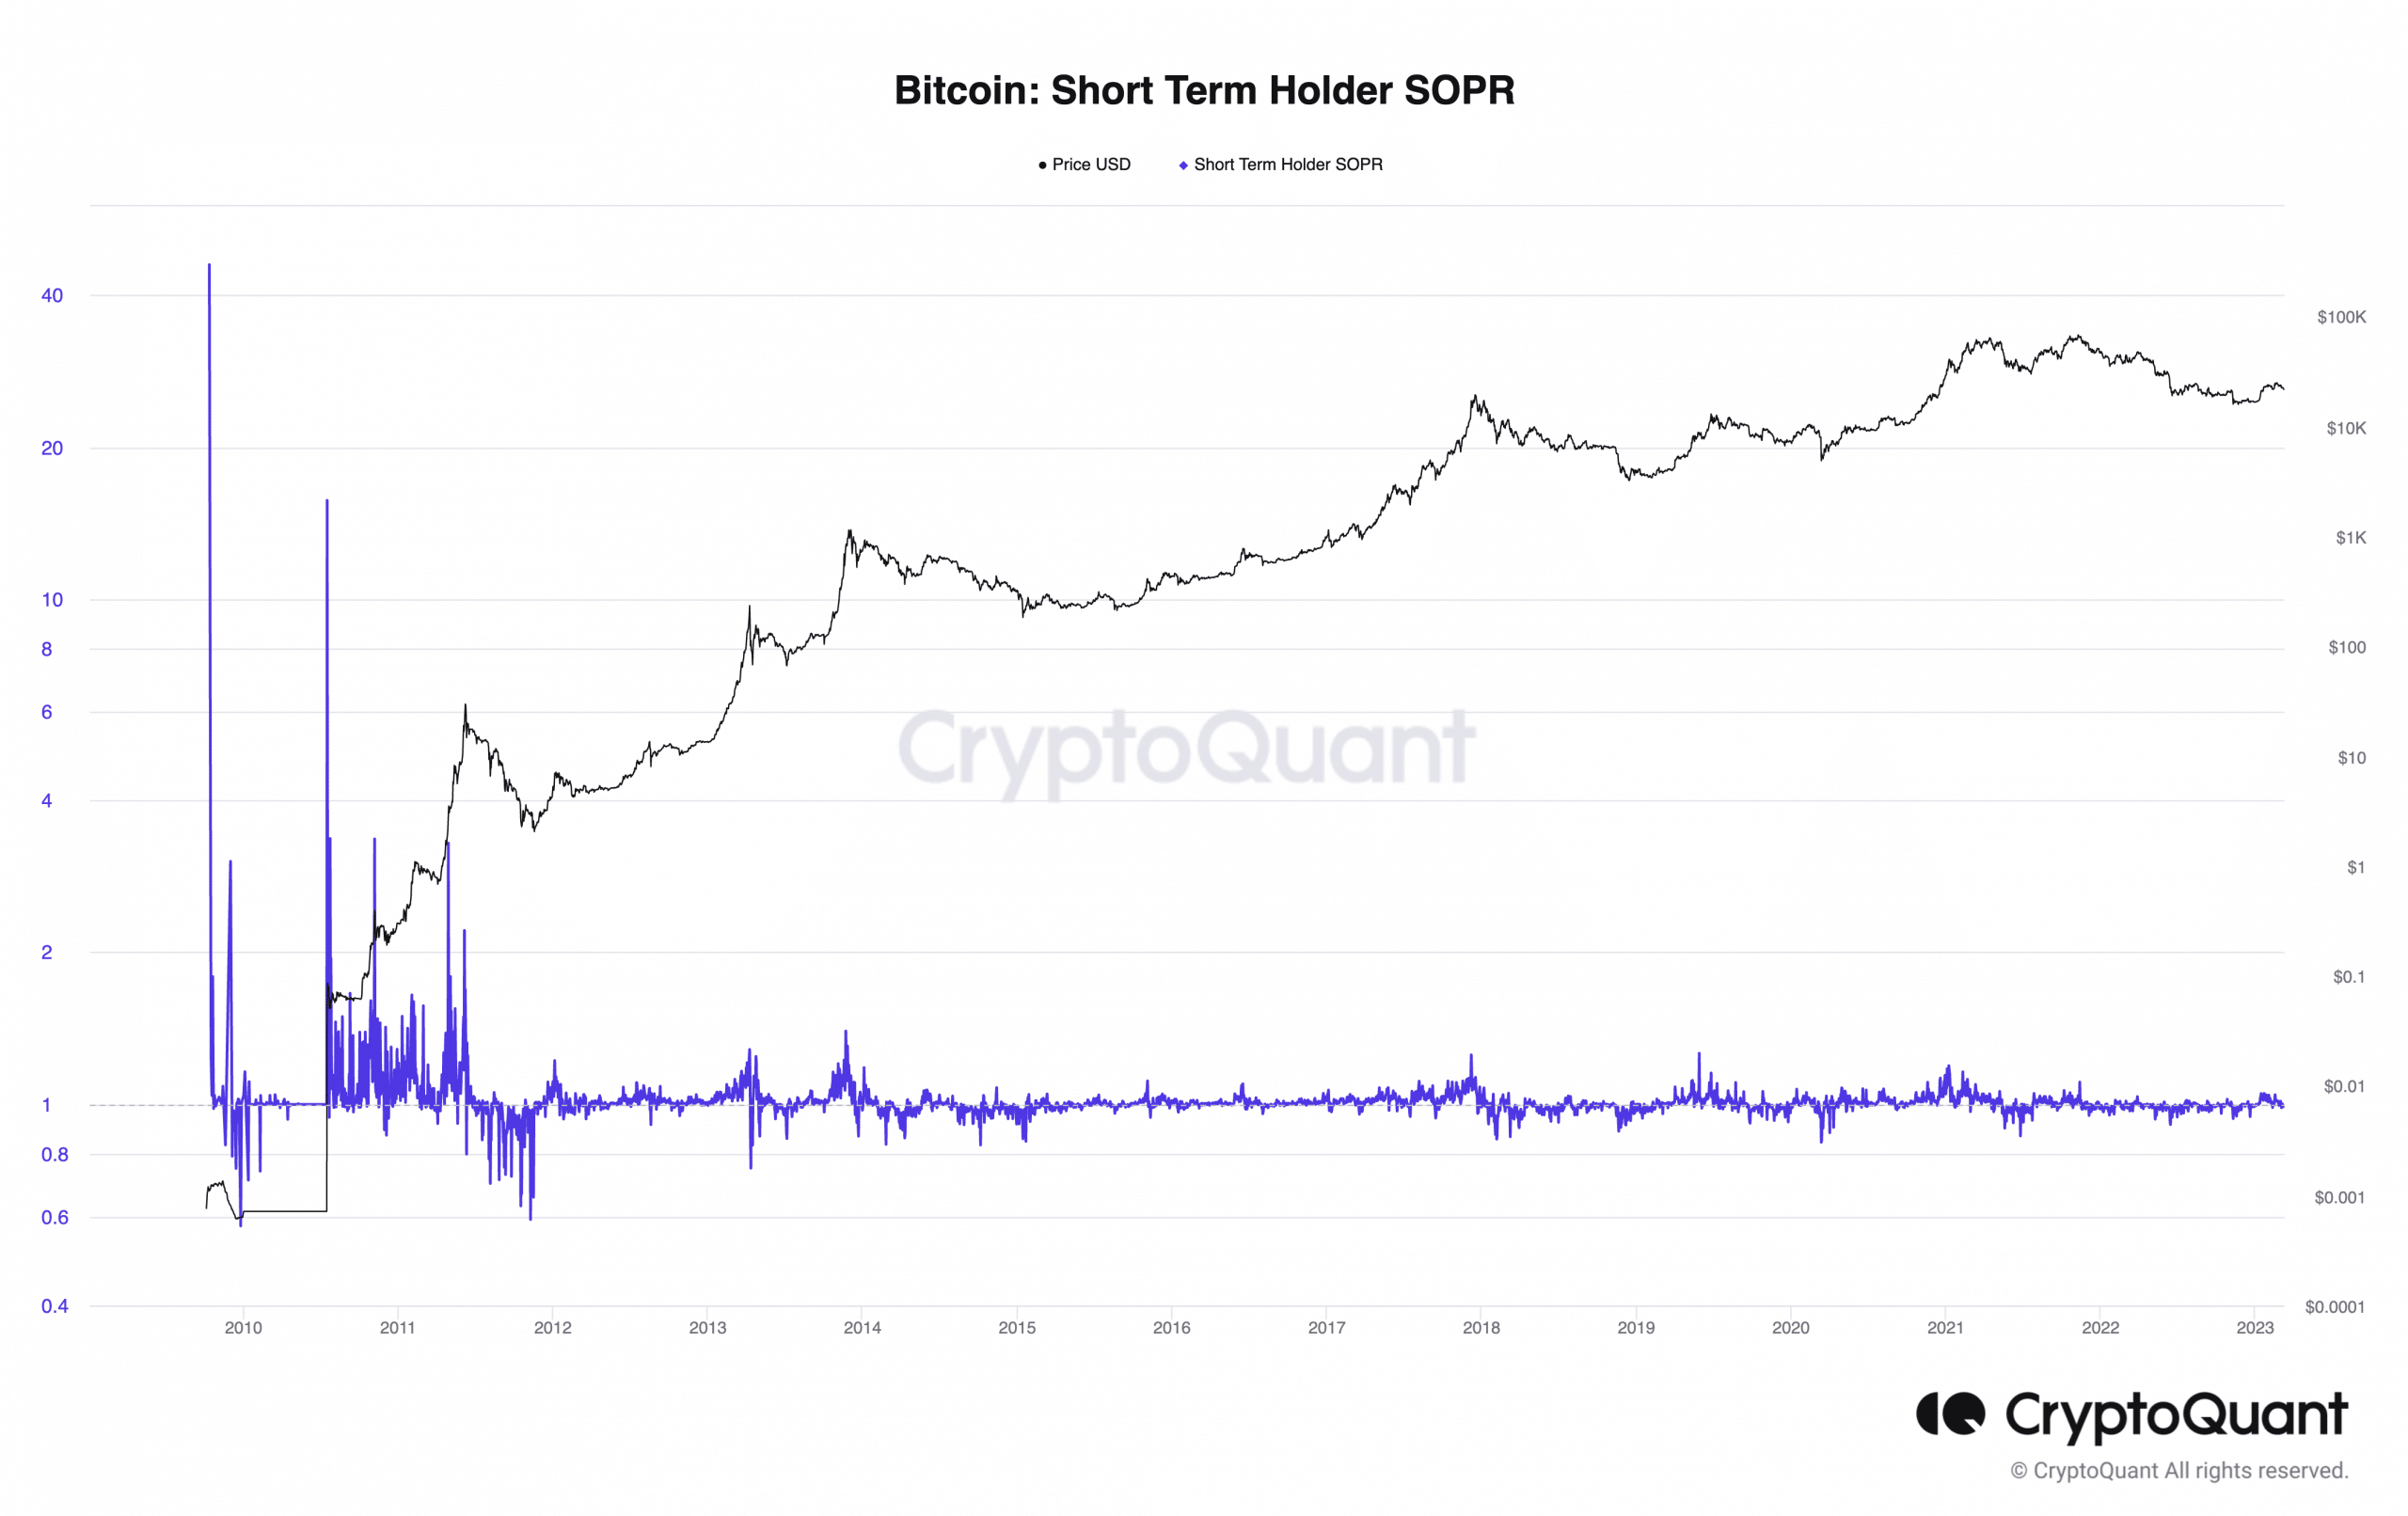 Bitcoin short-term holders SOPR